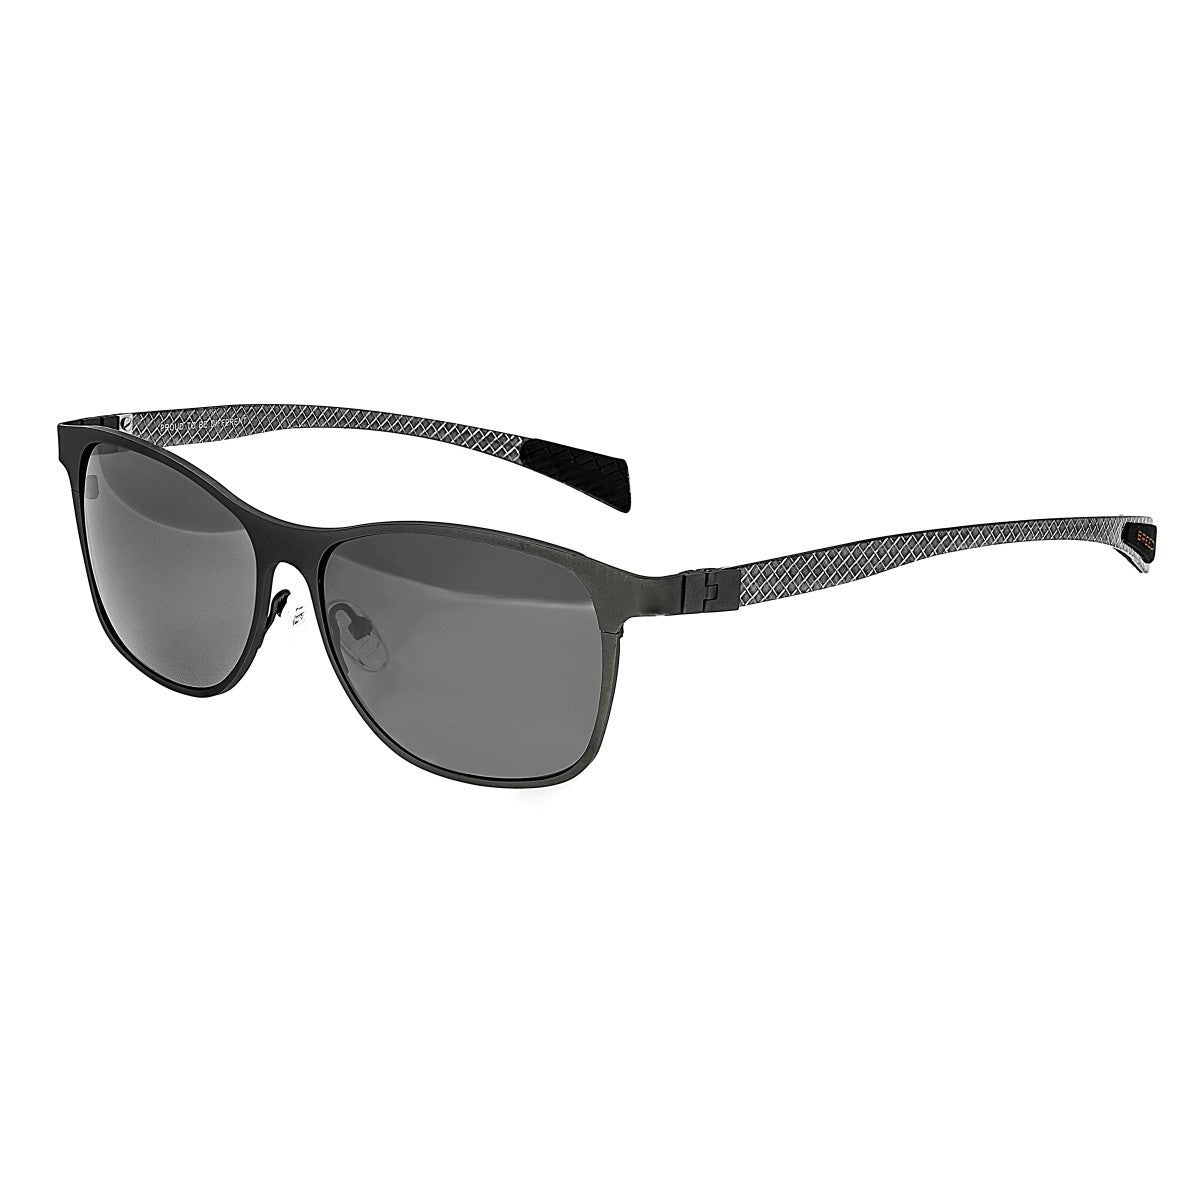 Breed Templar Titanium Polarized Sunglasses - Gunmetal/Black - BSG035GM